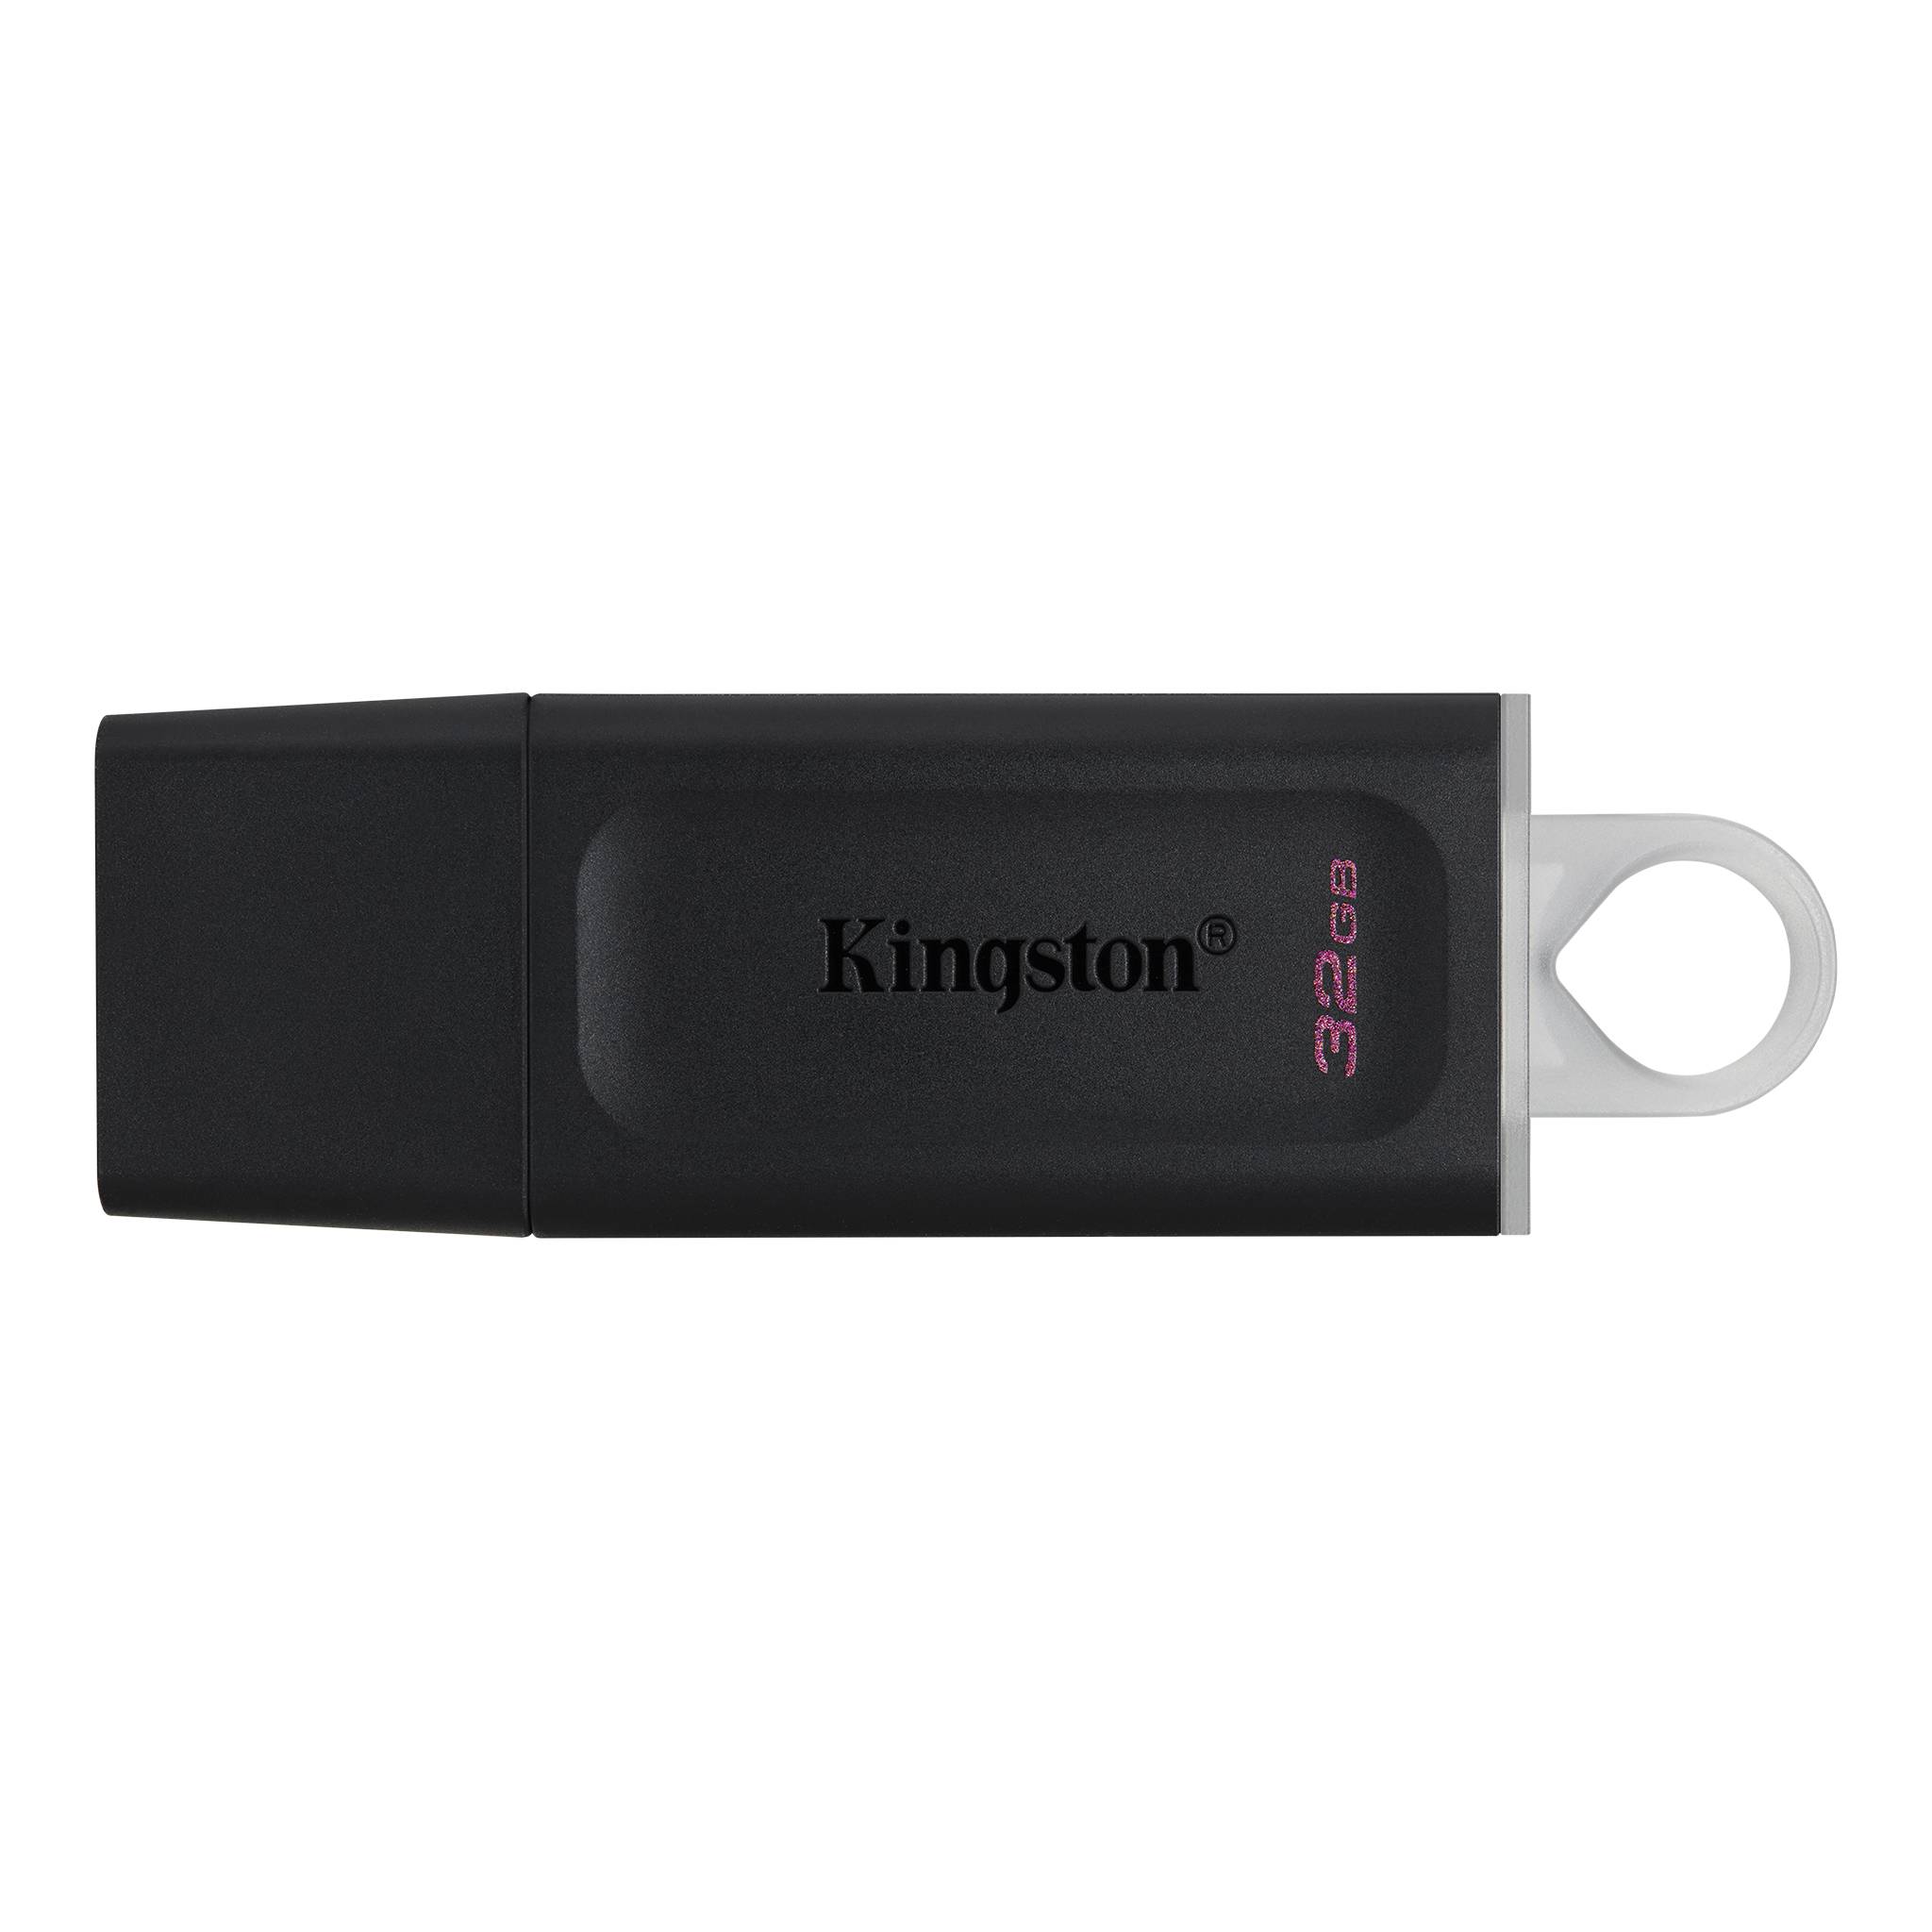 Adapters/Kingston: Kingston, 32GB, USB3.0, Flash, Drive, Memory, Stick, Thumb, Key, DataTraveler, DT100G3, Retail, Pack, 5yrs, warranty, ~USK-DT100G3-32F, 